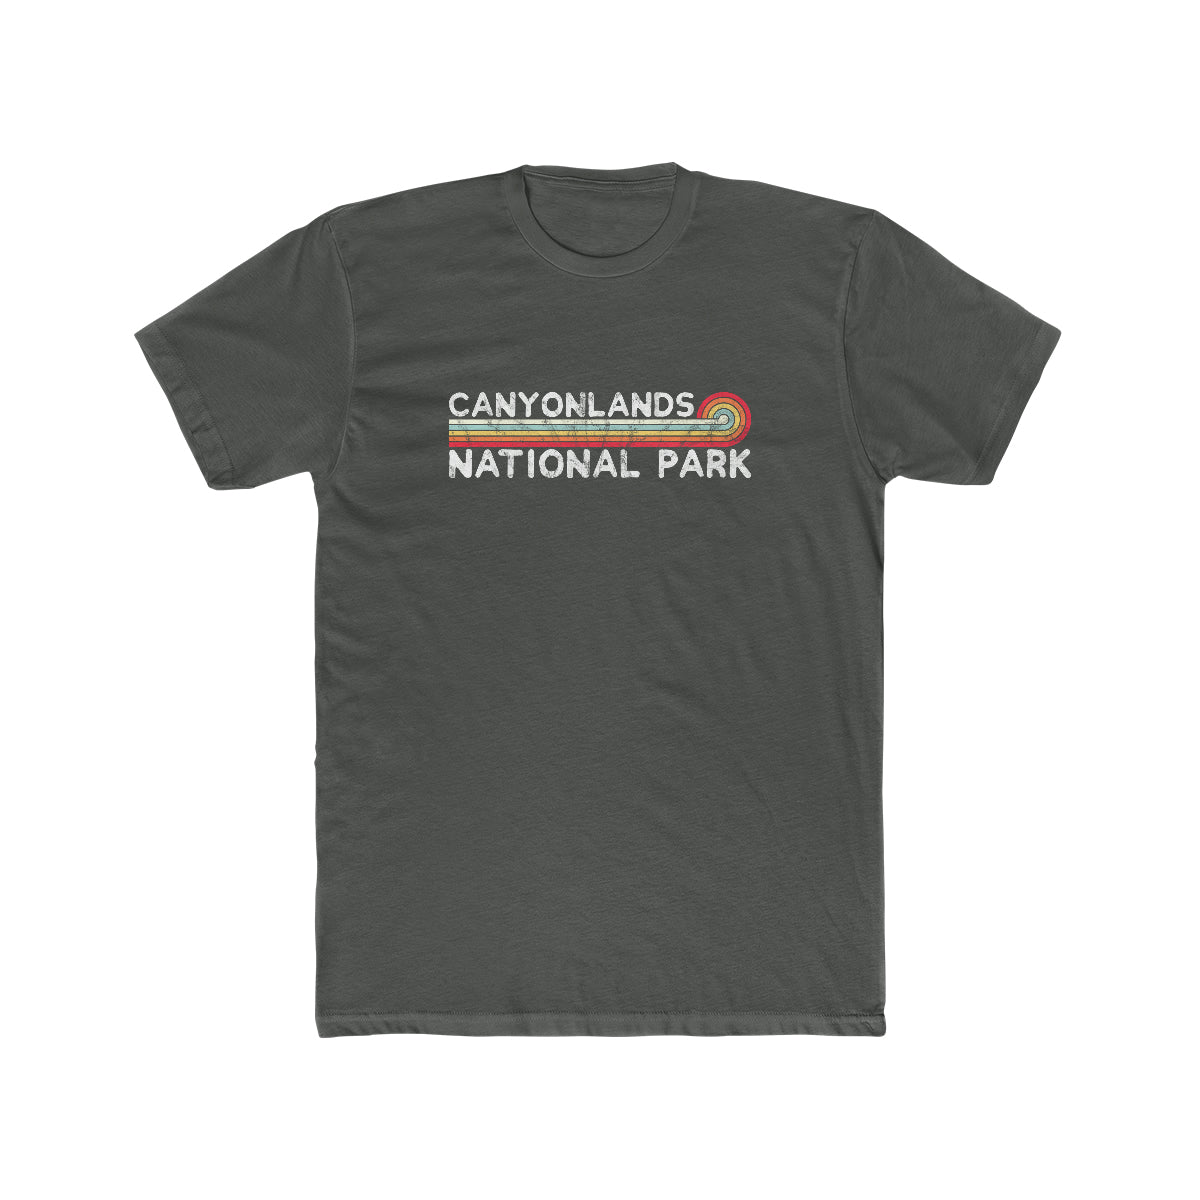 Canyonlands National Park T-Shirt - Vintage Stretched Sunrise